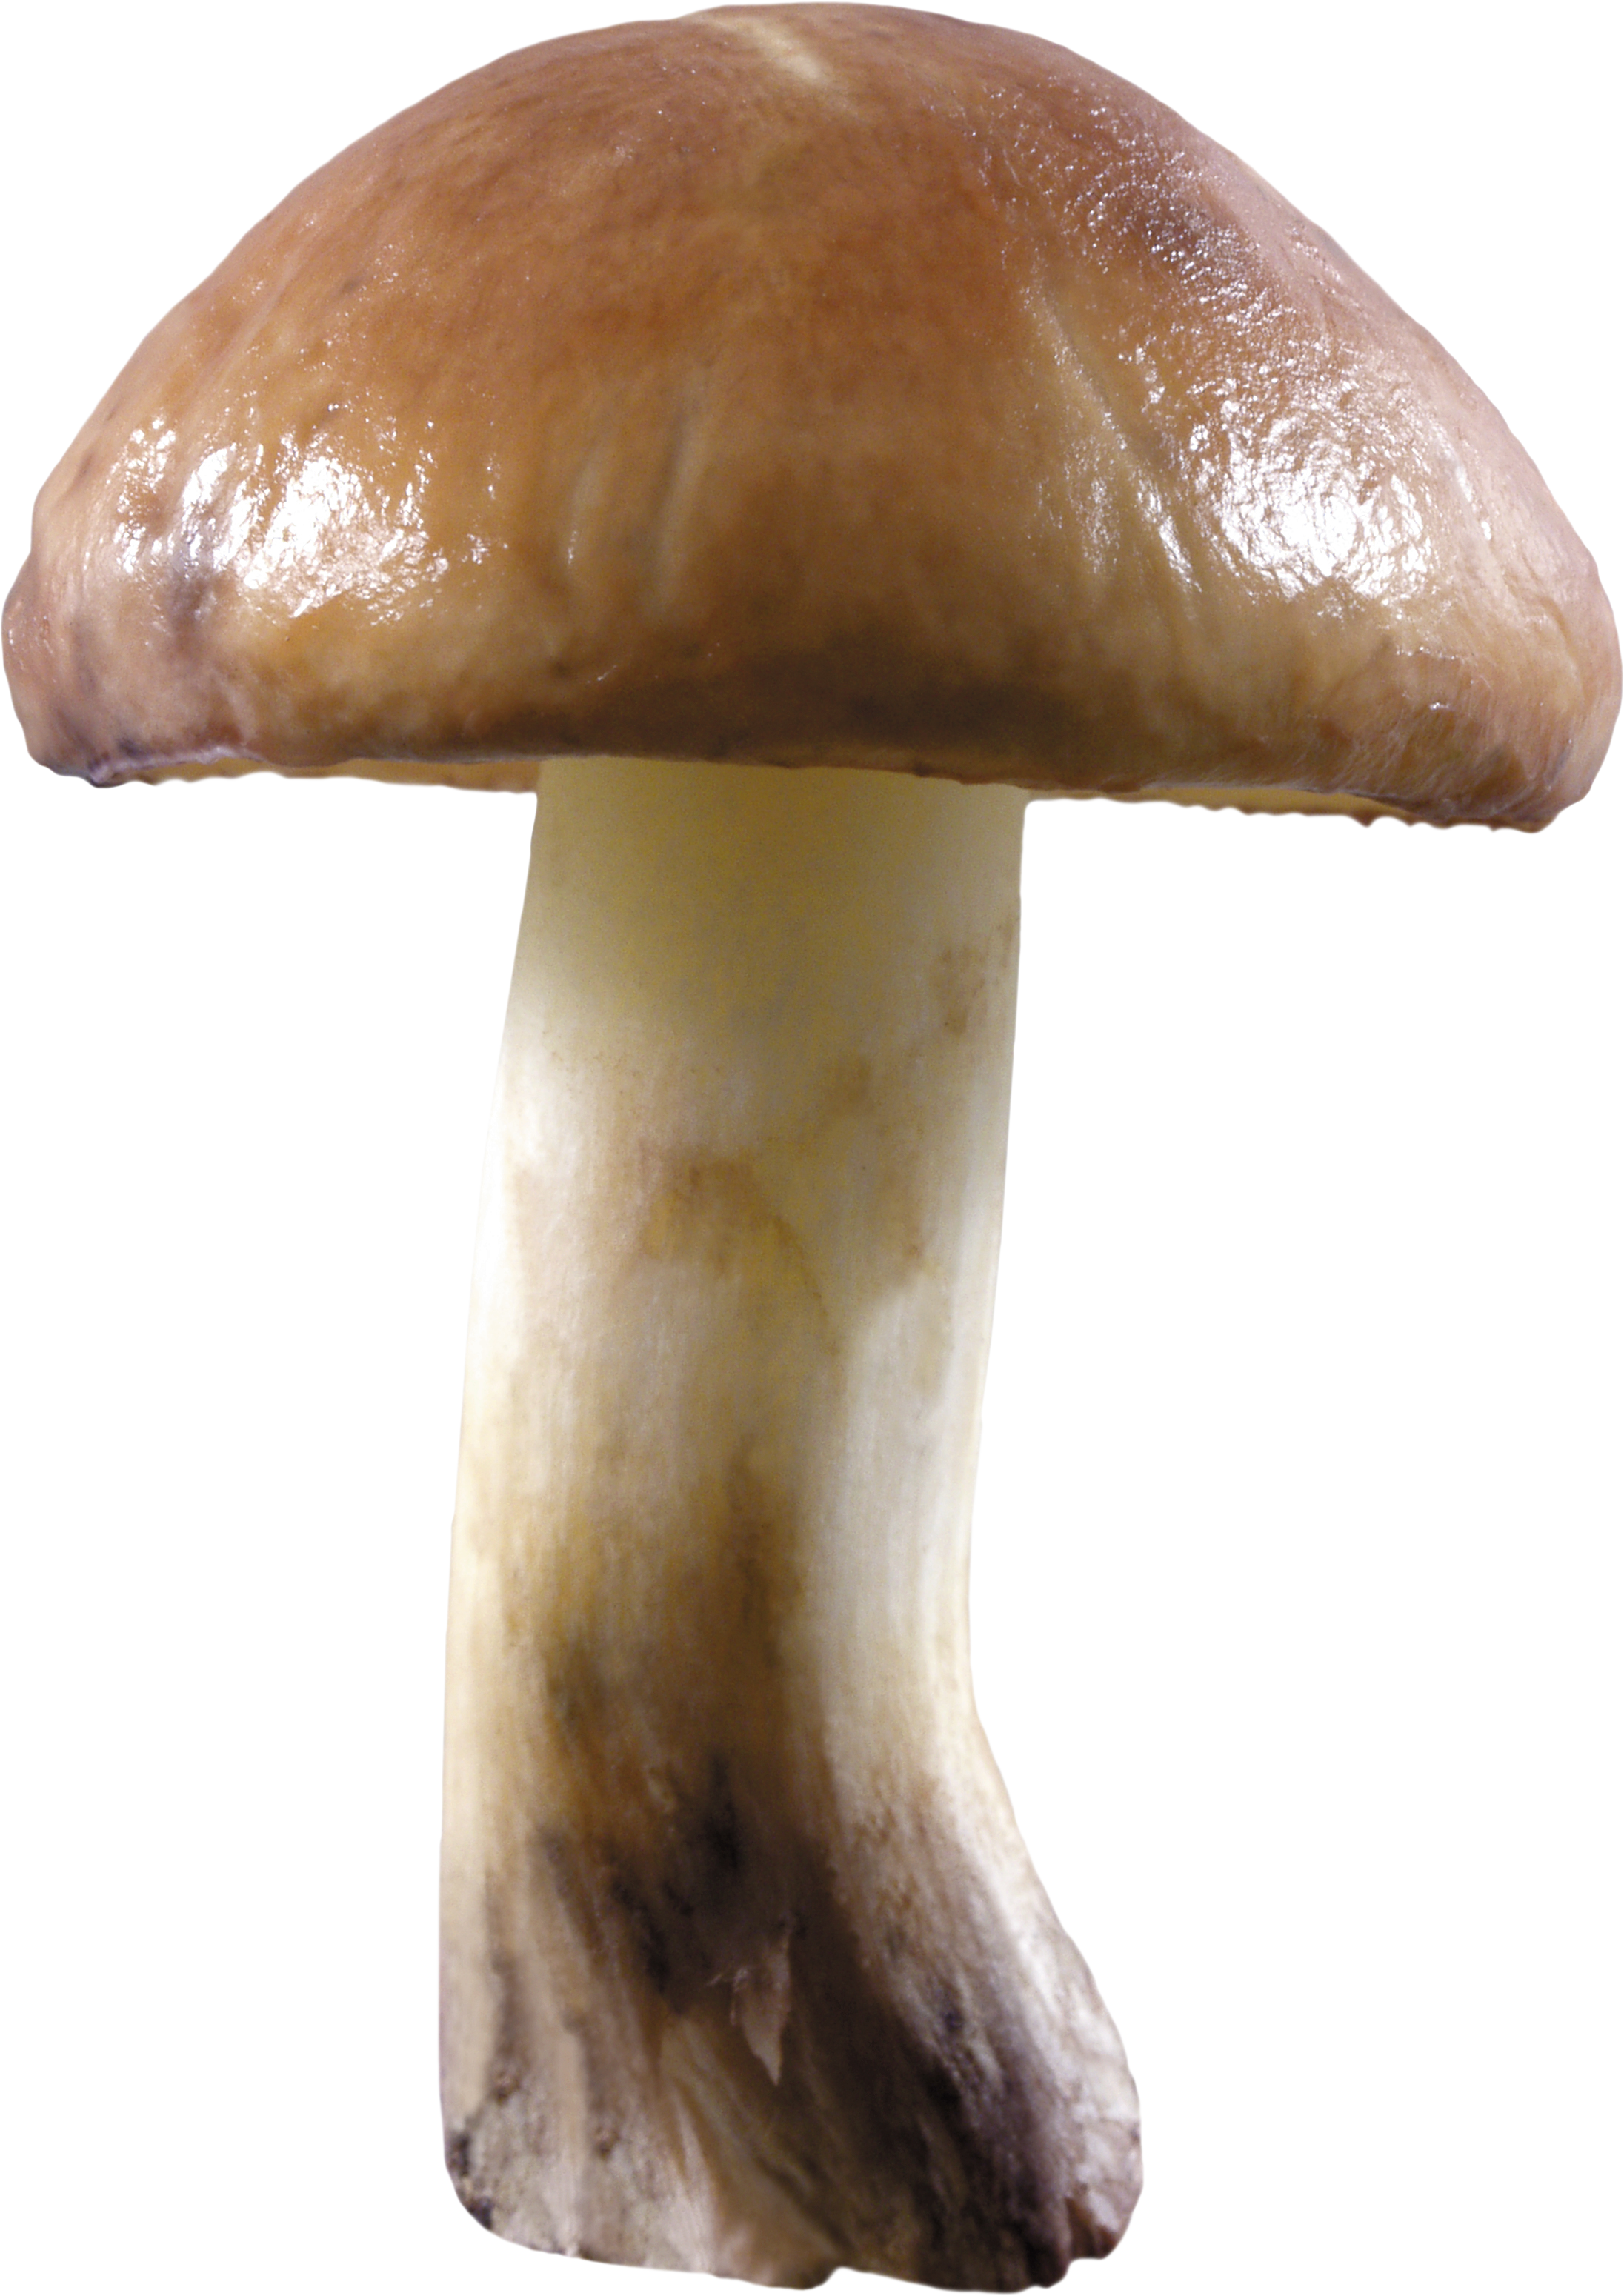 Mushroom clipart edible mushroom. Png image purepng free